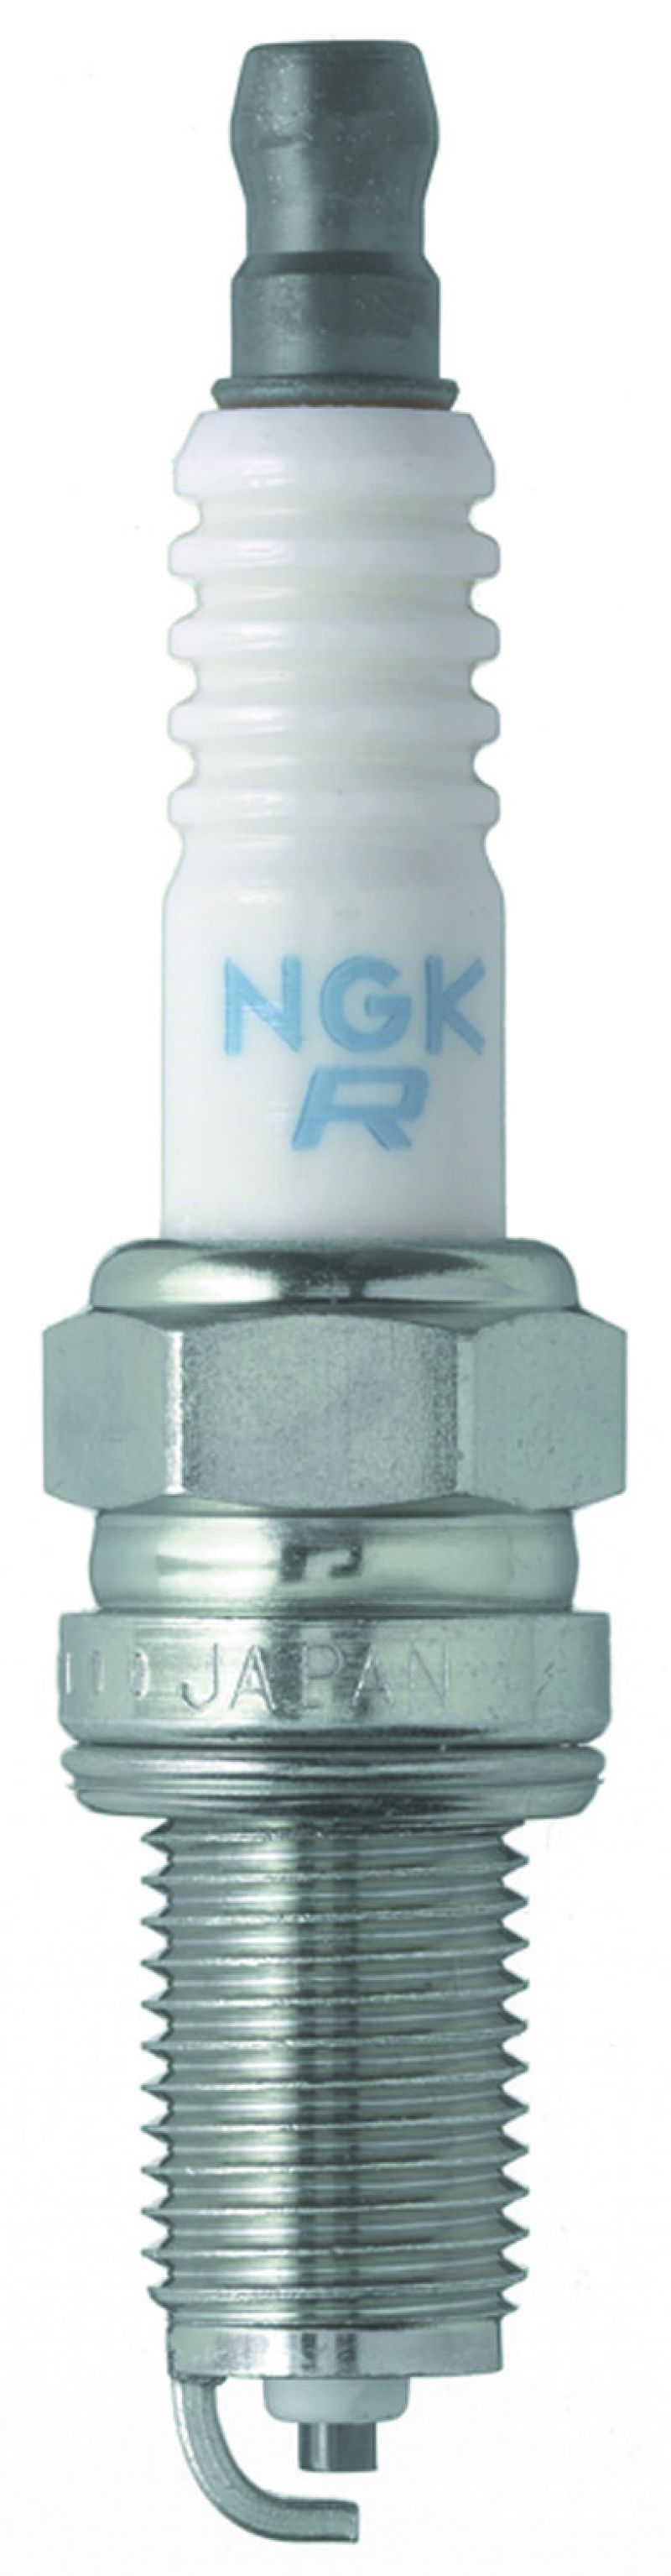 NGK Standard Spark Plug Box of 10 (DCPR8E SOLID) - 4179